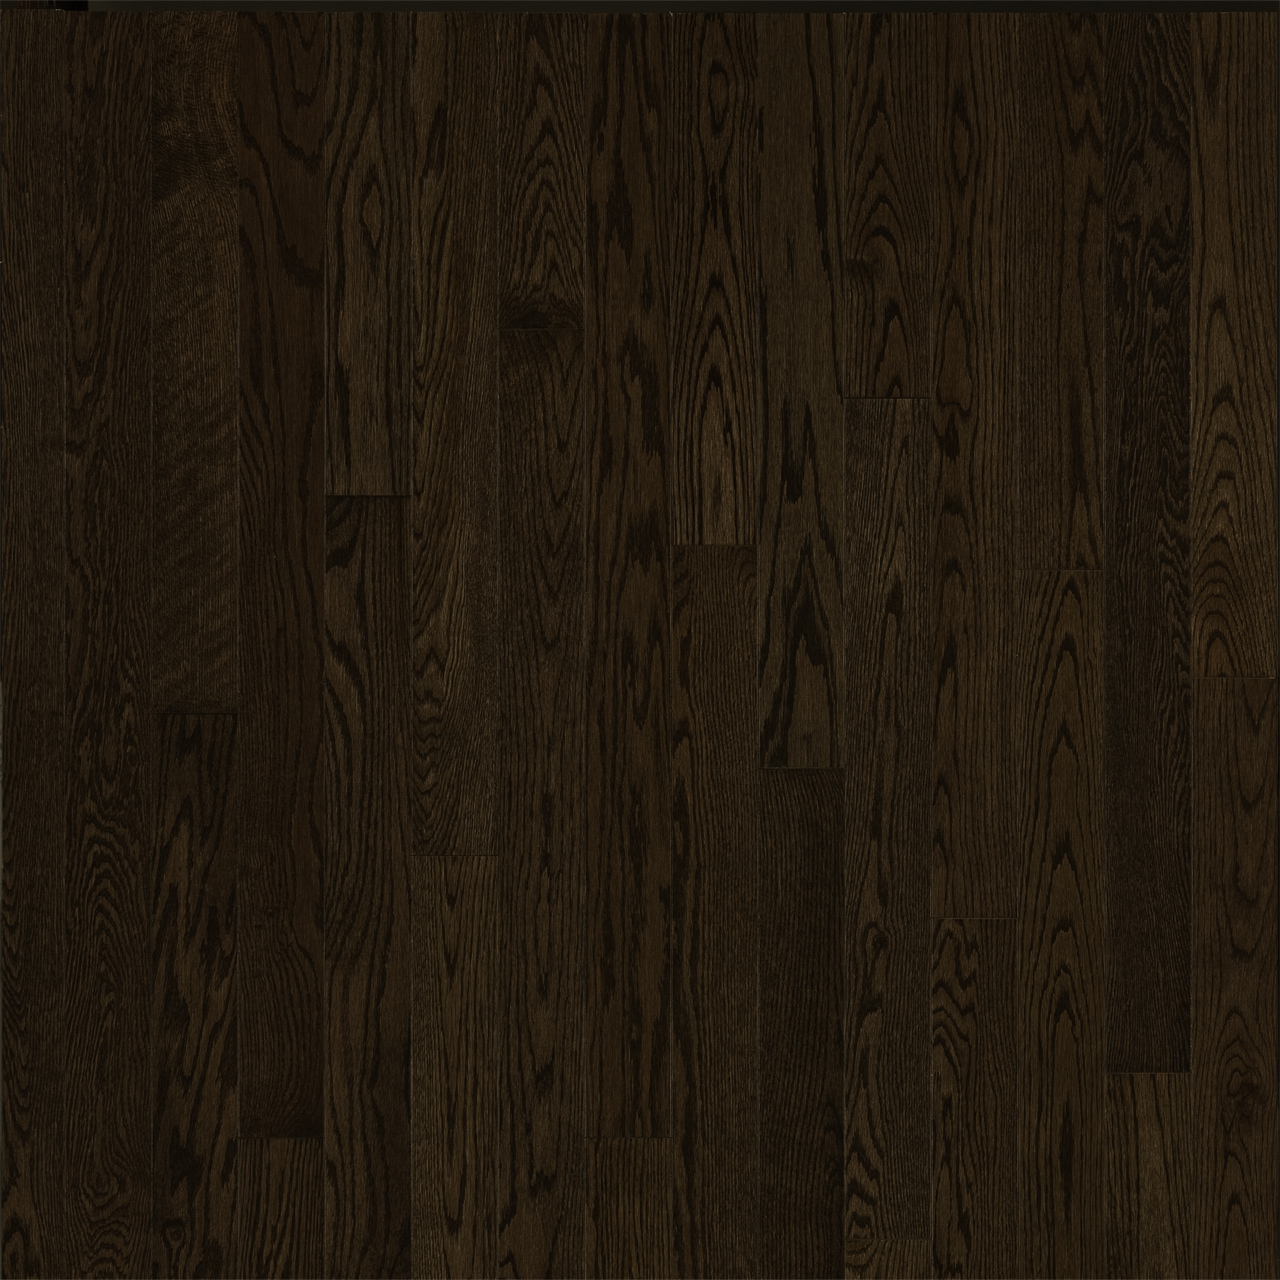 Red Oak Espresso Wood Floors By Jbw